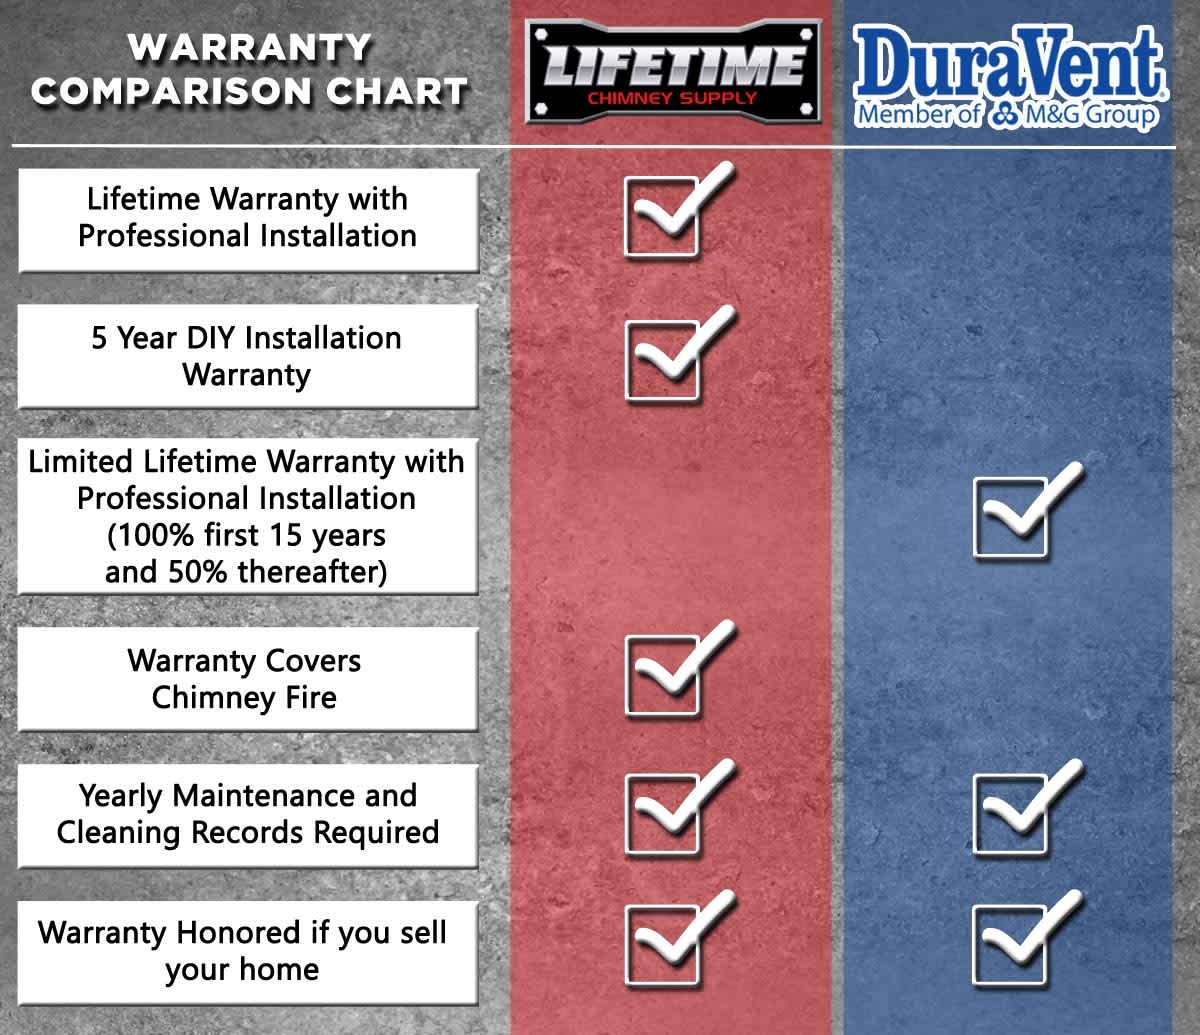 Chimney Liner Warranty Comparison Chart: Lifetime Chimney Supply VS. DuraVent